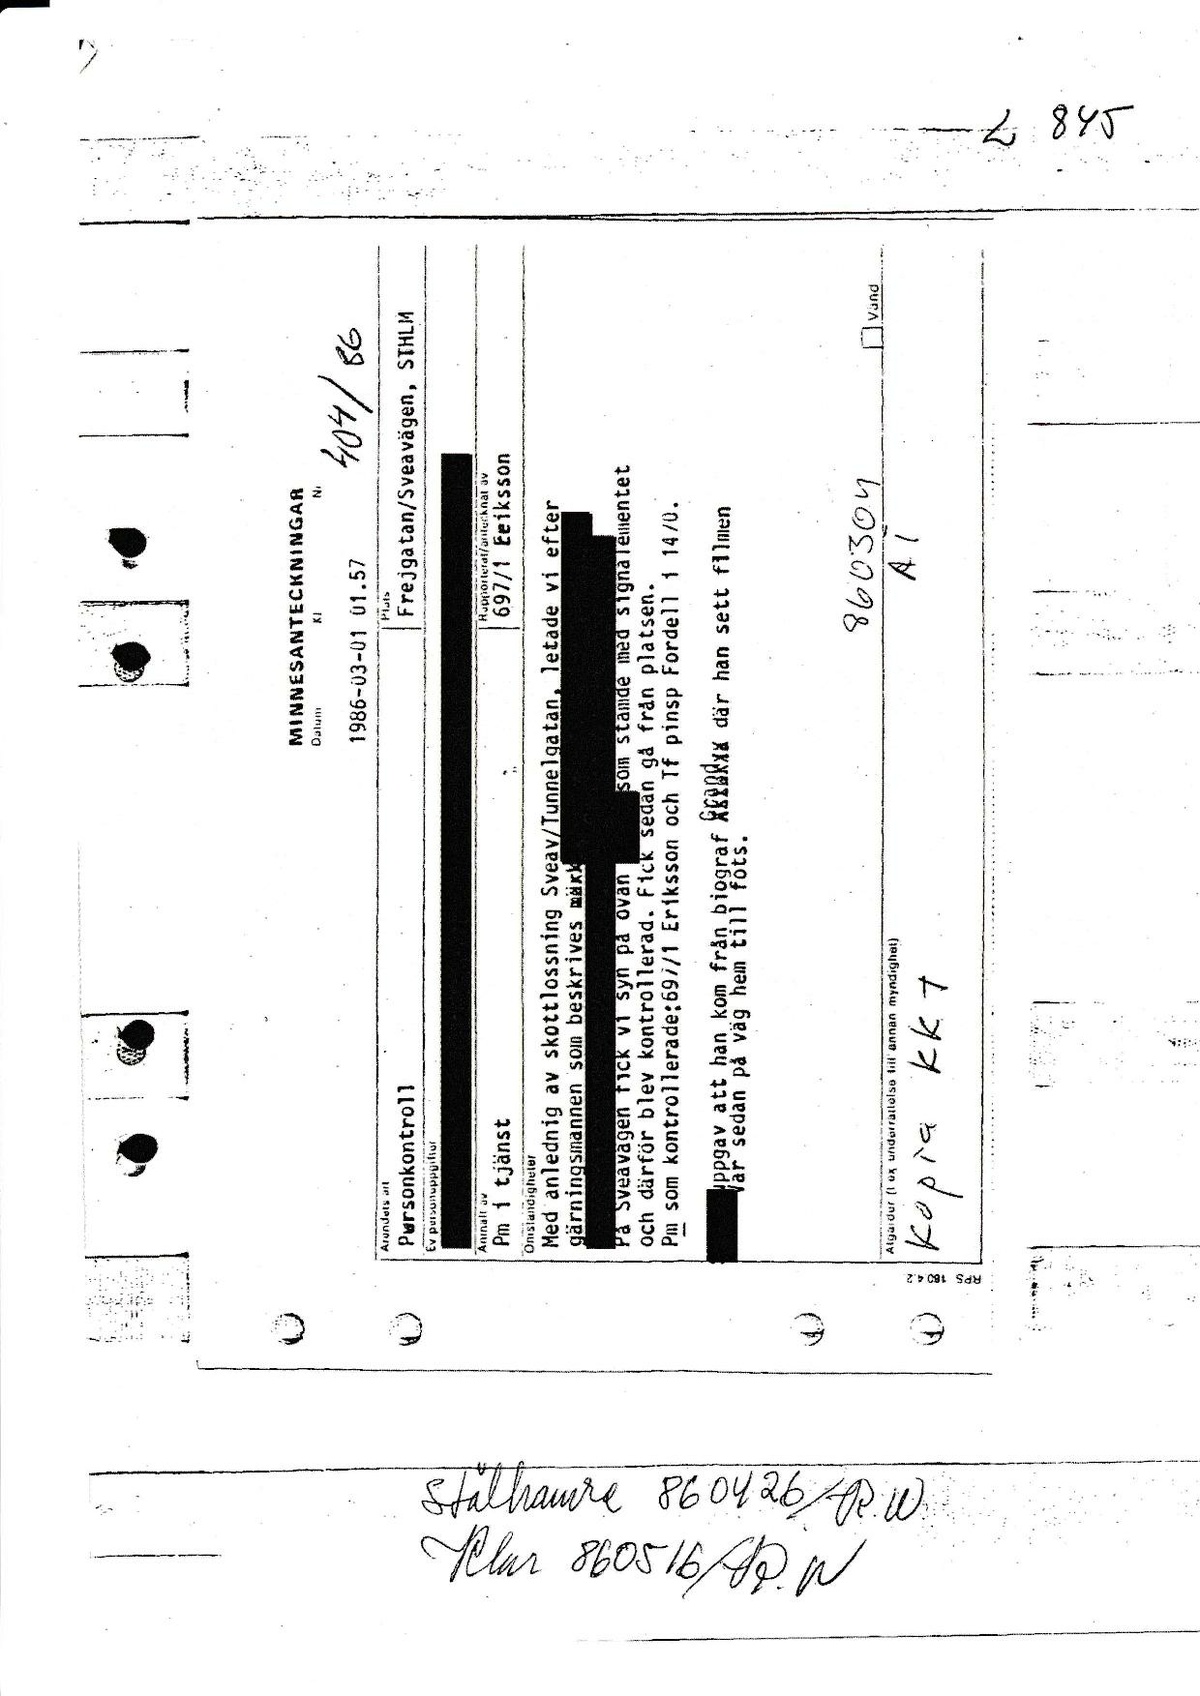 Pol-1986-03-01 L845-00 Kontroll-av-person-som-matchar-signalement-biobesökare.pdf